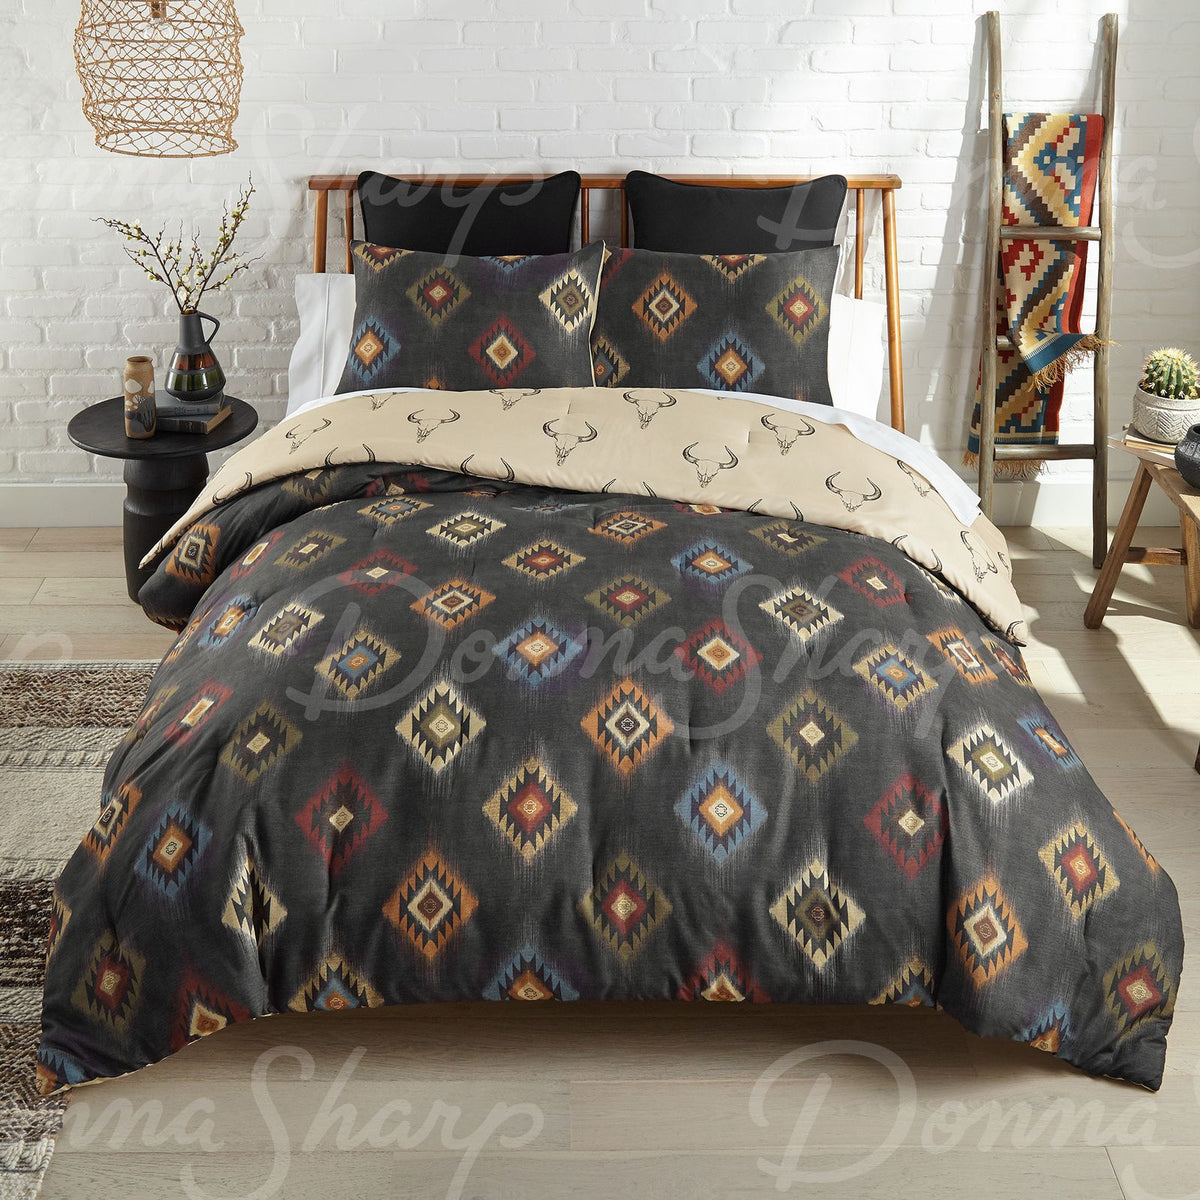 Phoenix Comforter Collection